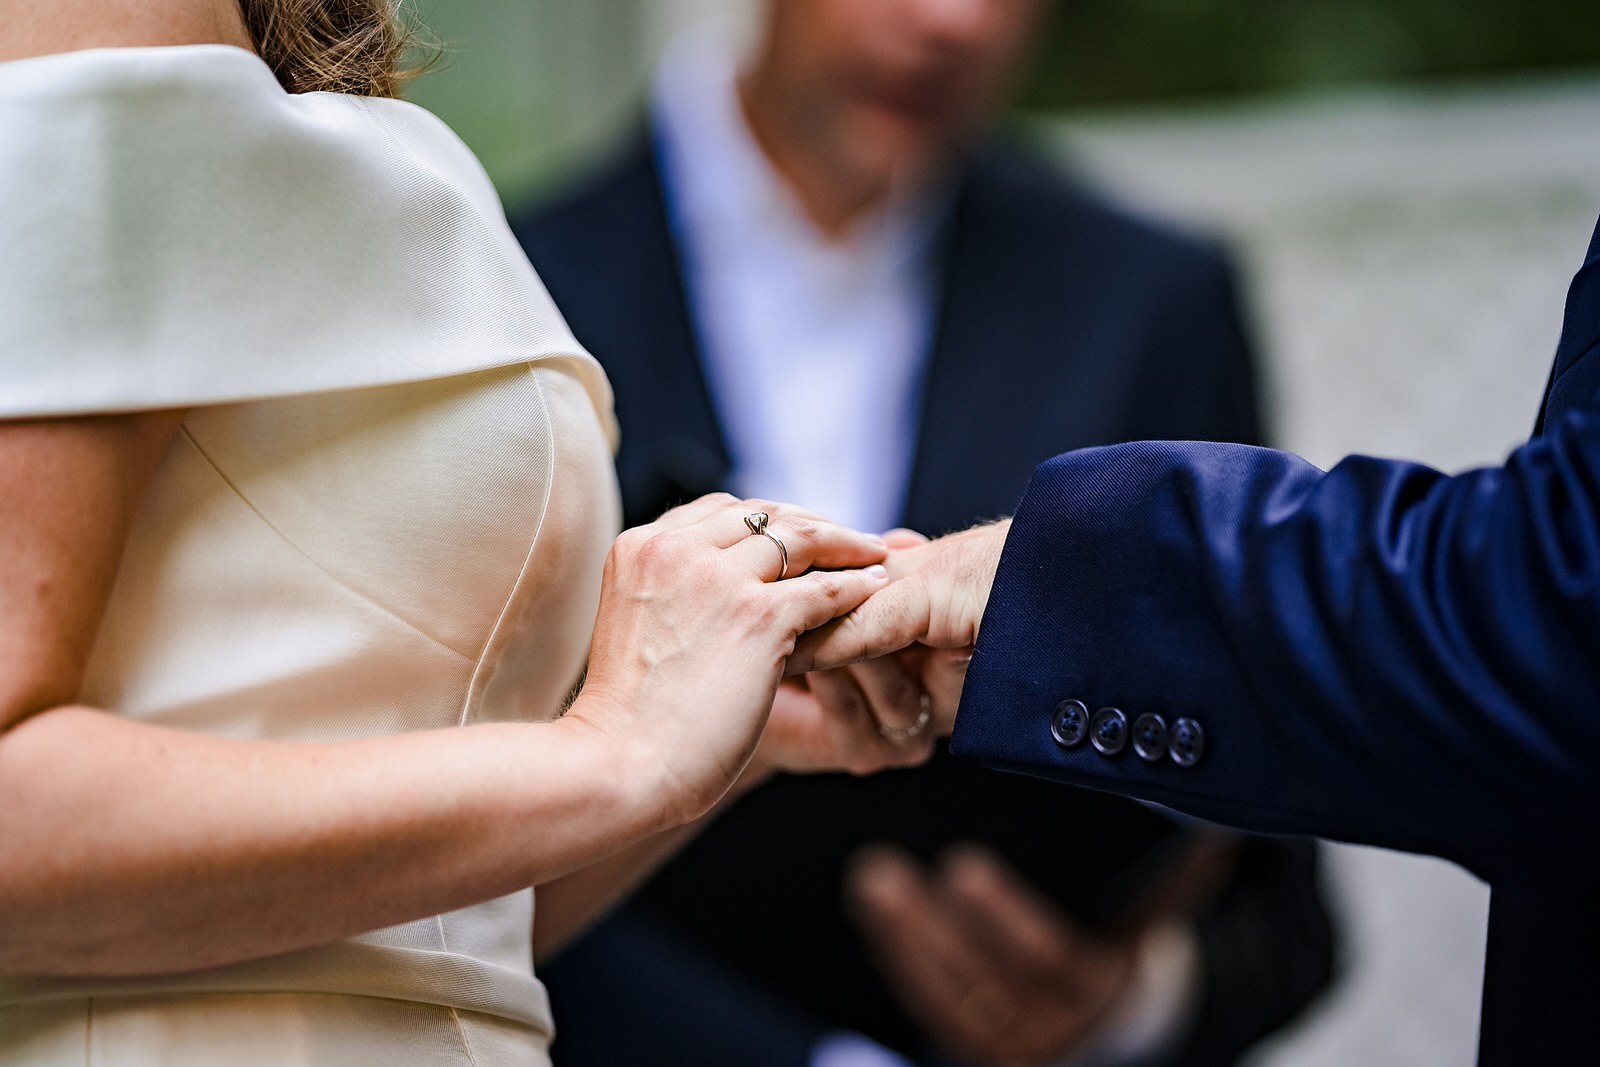 Bride slides wedding ring onto groom's finger